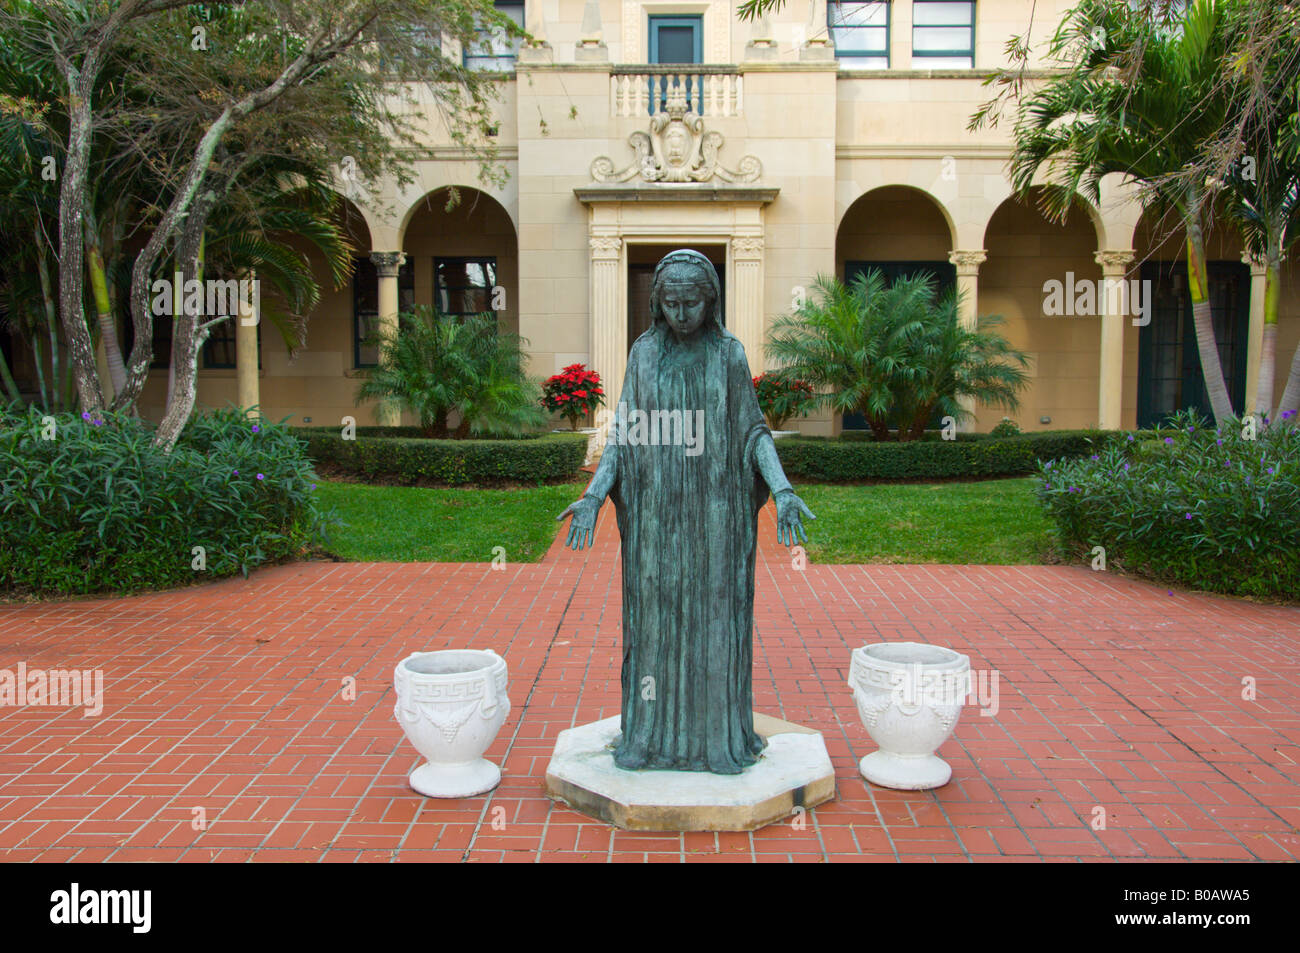 Exterior garden of the St Edwards Roman Catholic Church in Palm Beach Florida USA Stock Photo